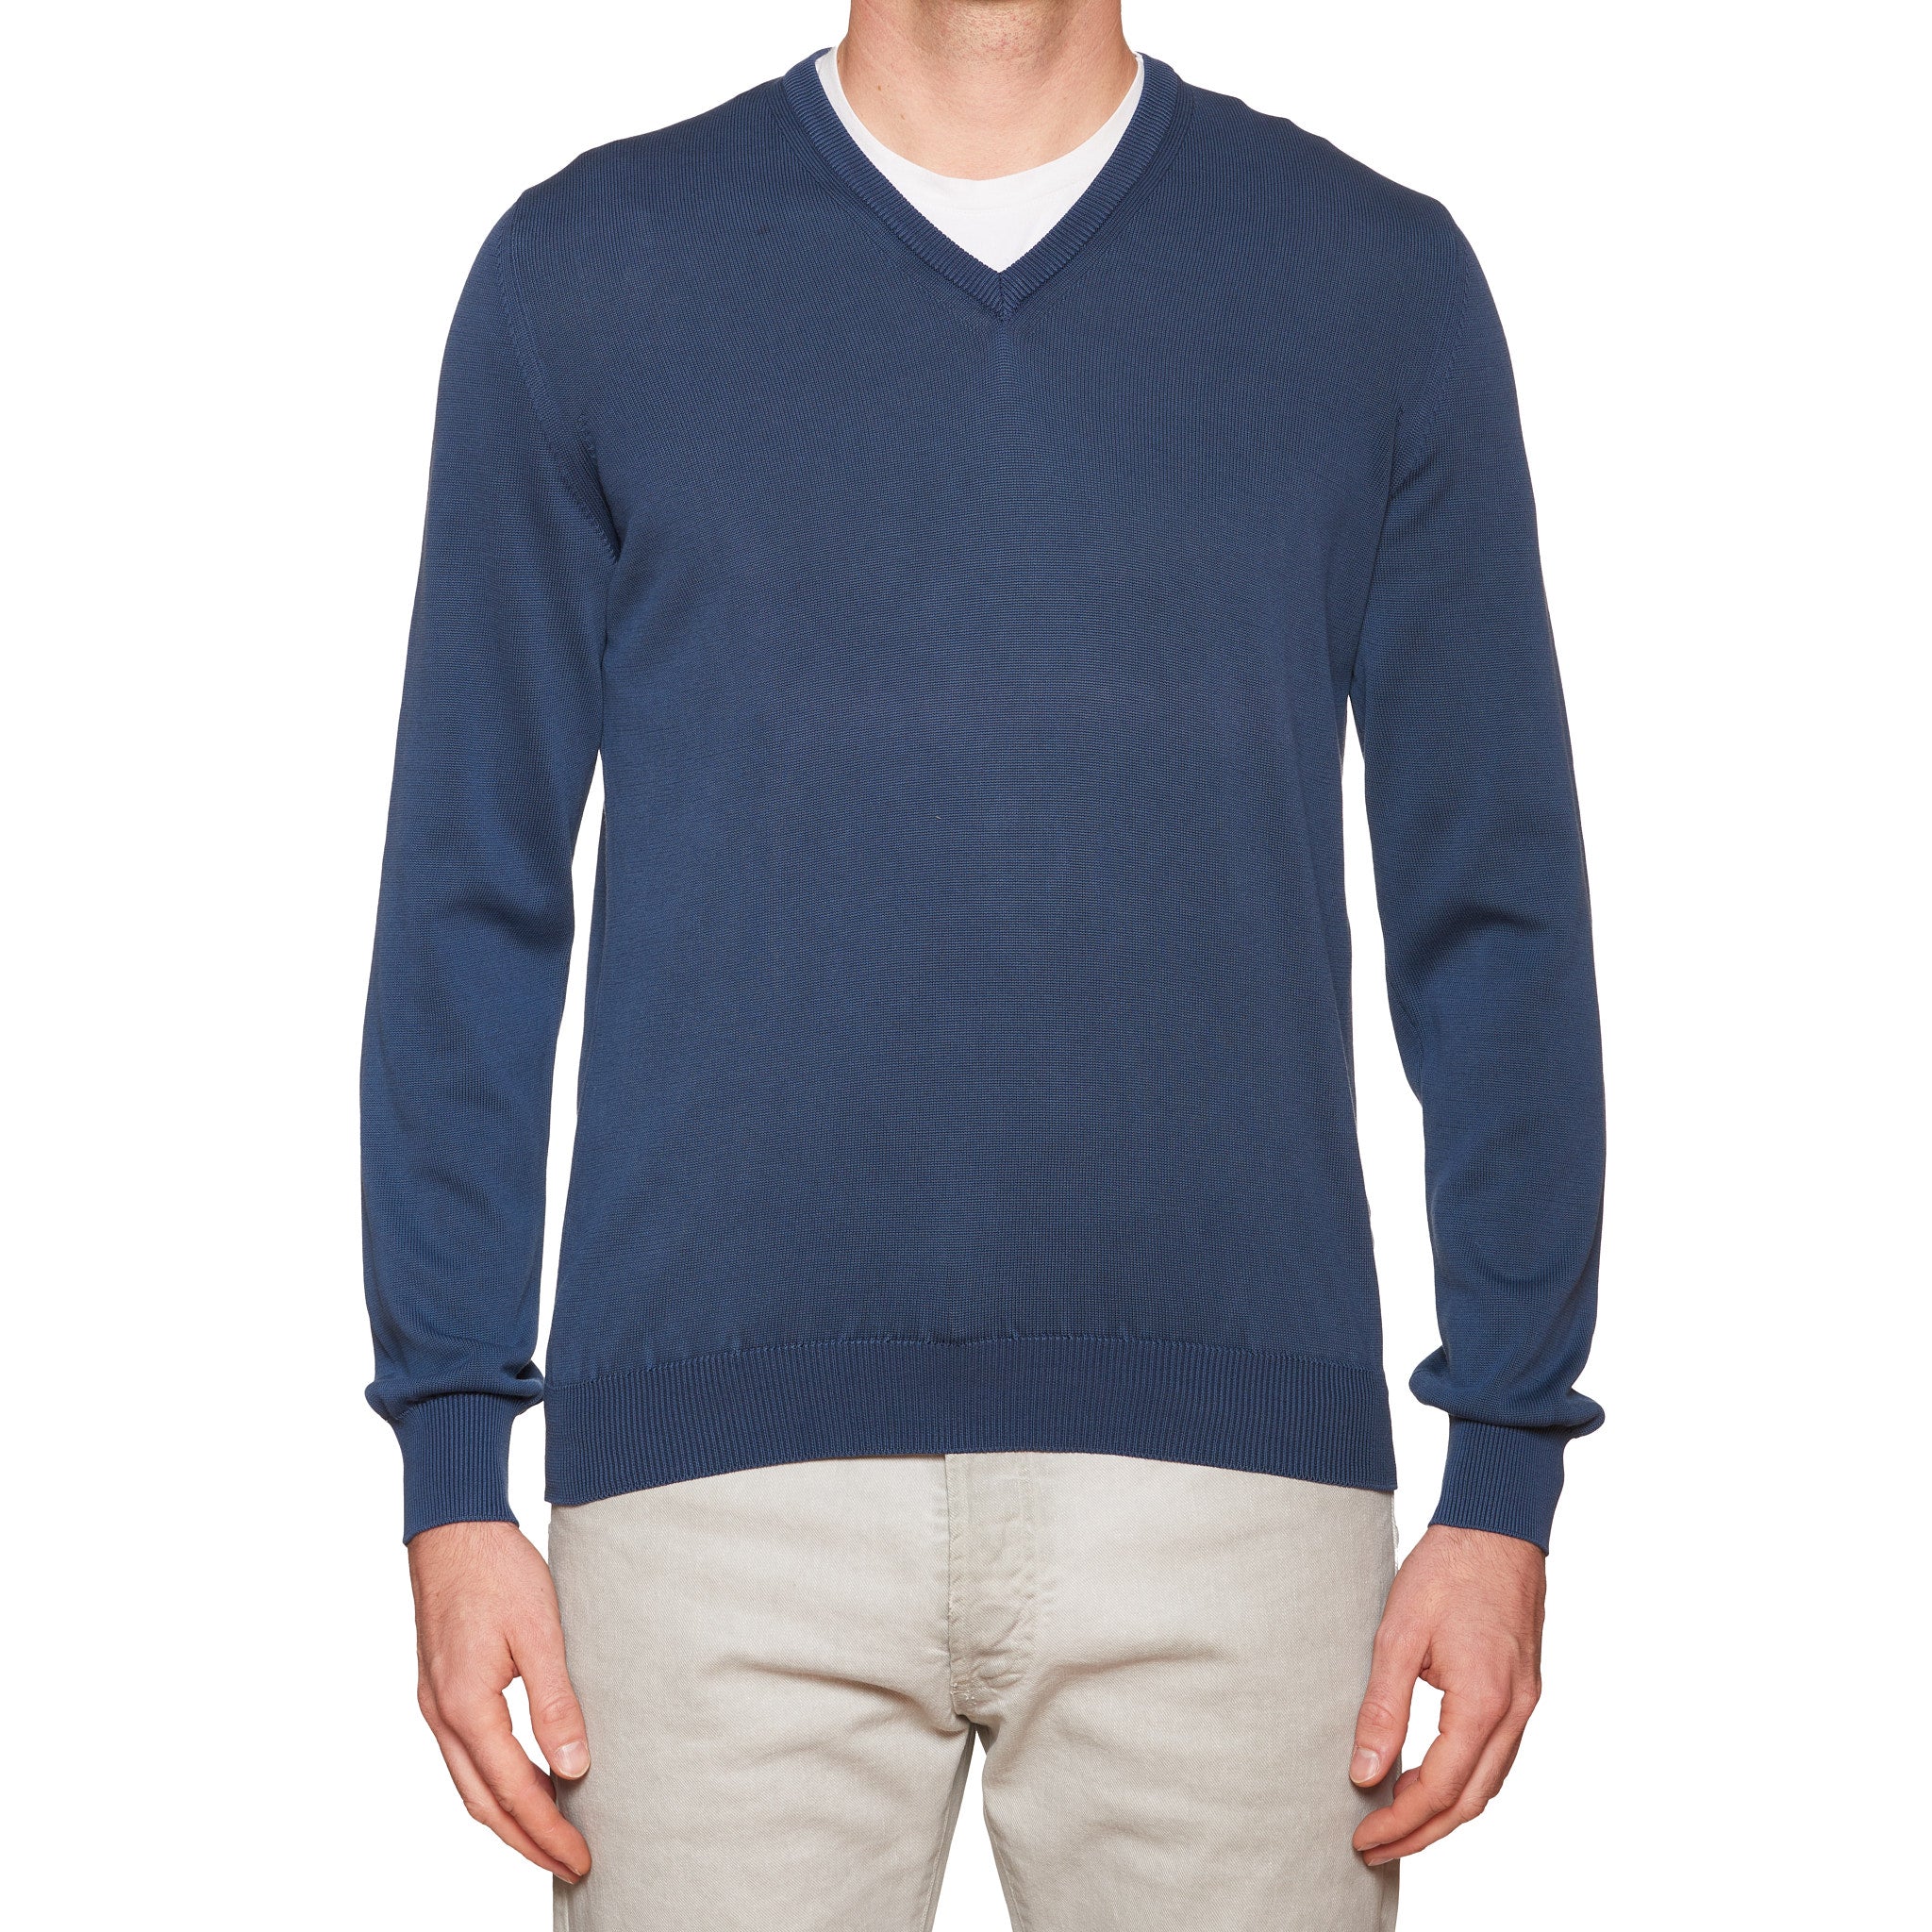 FEDELI Blue Dusty System Cotton V-Neck Sweater EU 50 NEW US M FEDELI